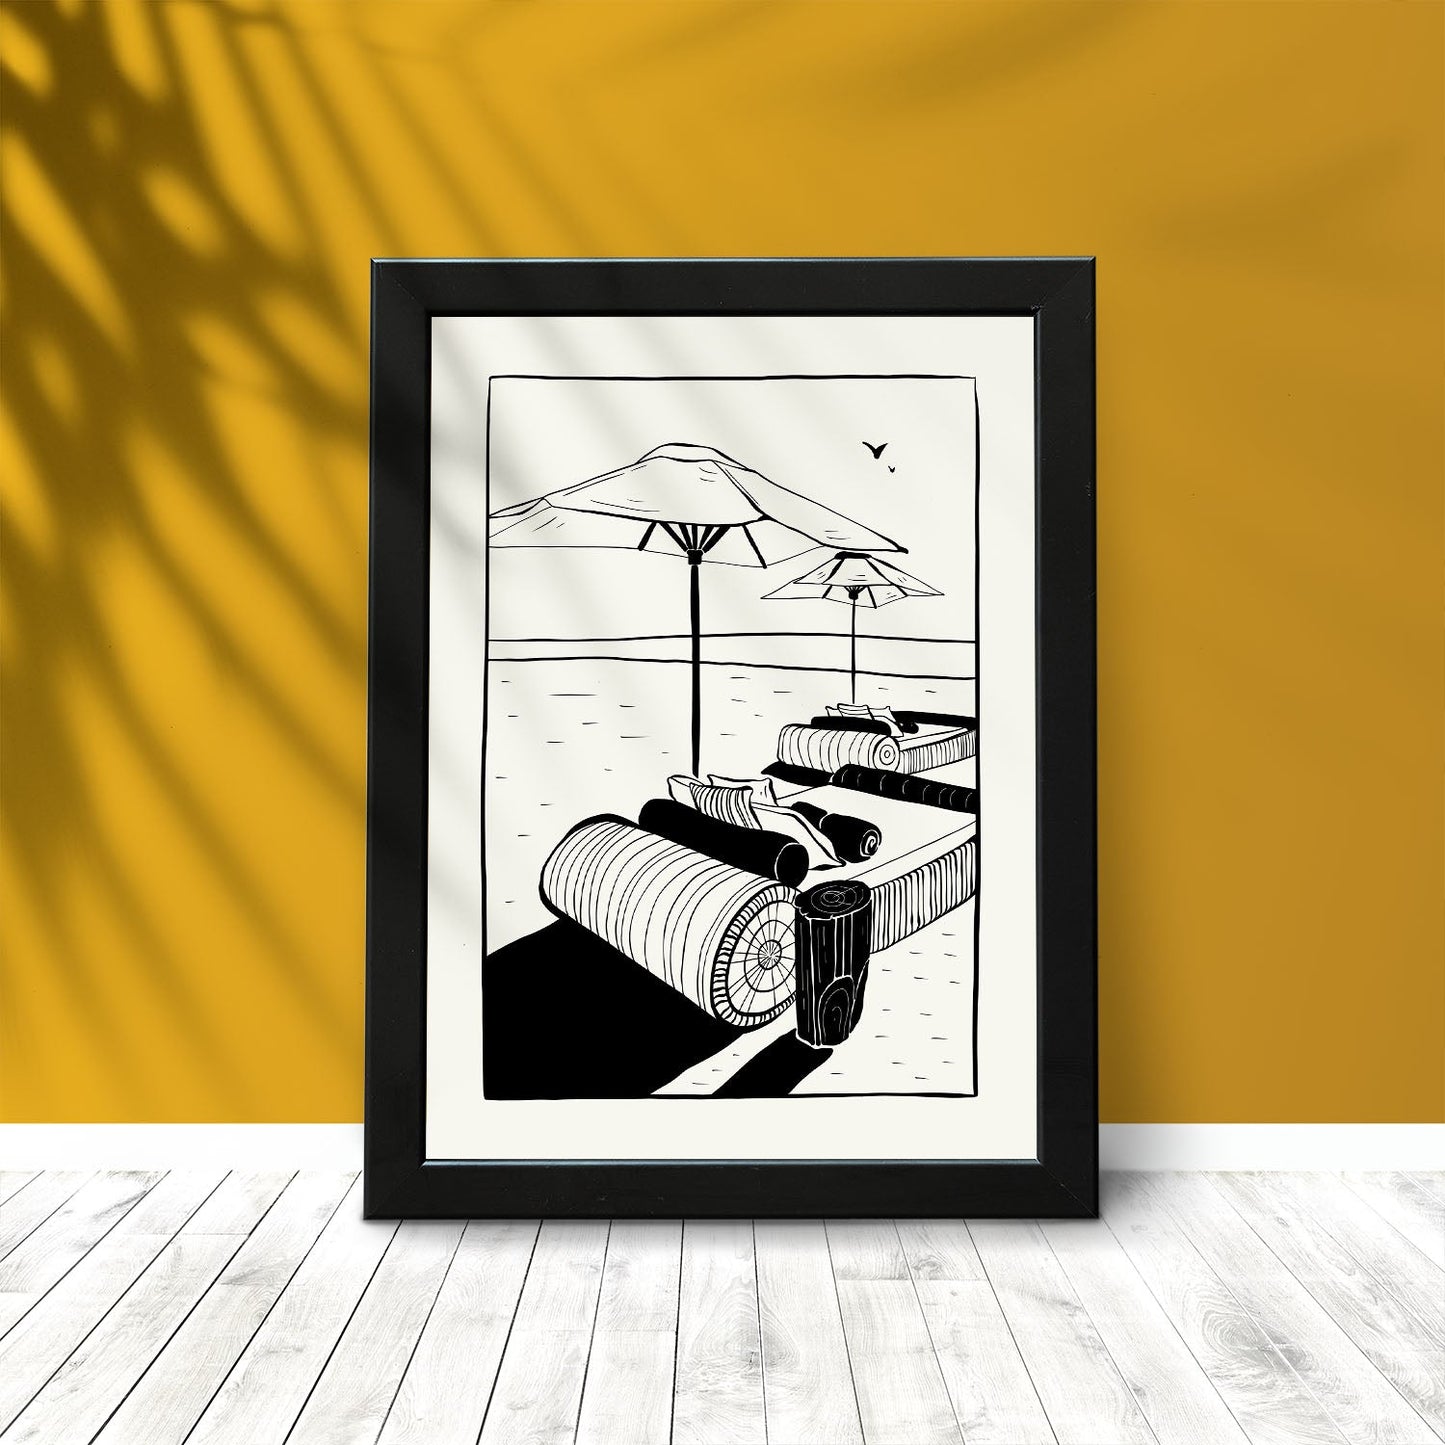 Beachside Umbrella-Artwork-Nacnic-Nacnic Estudio SL